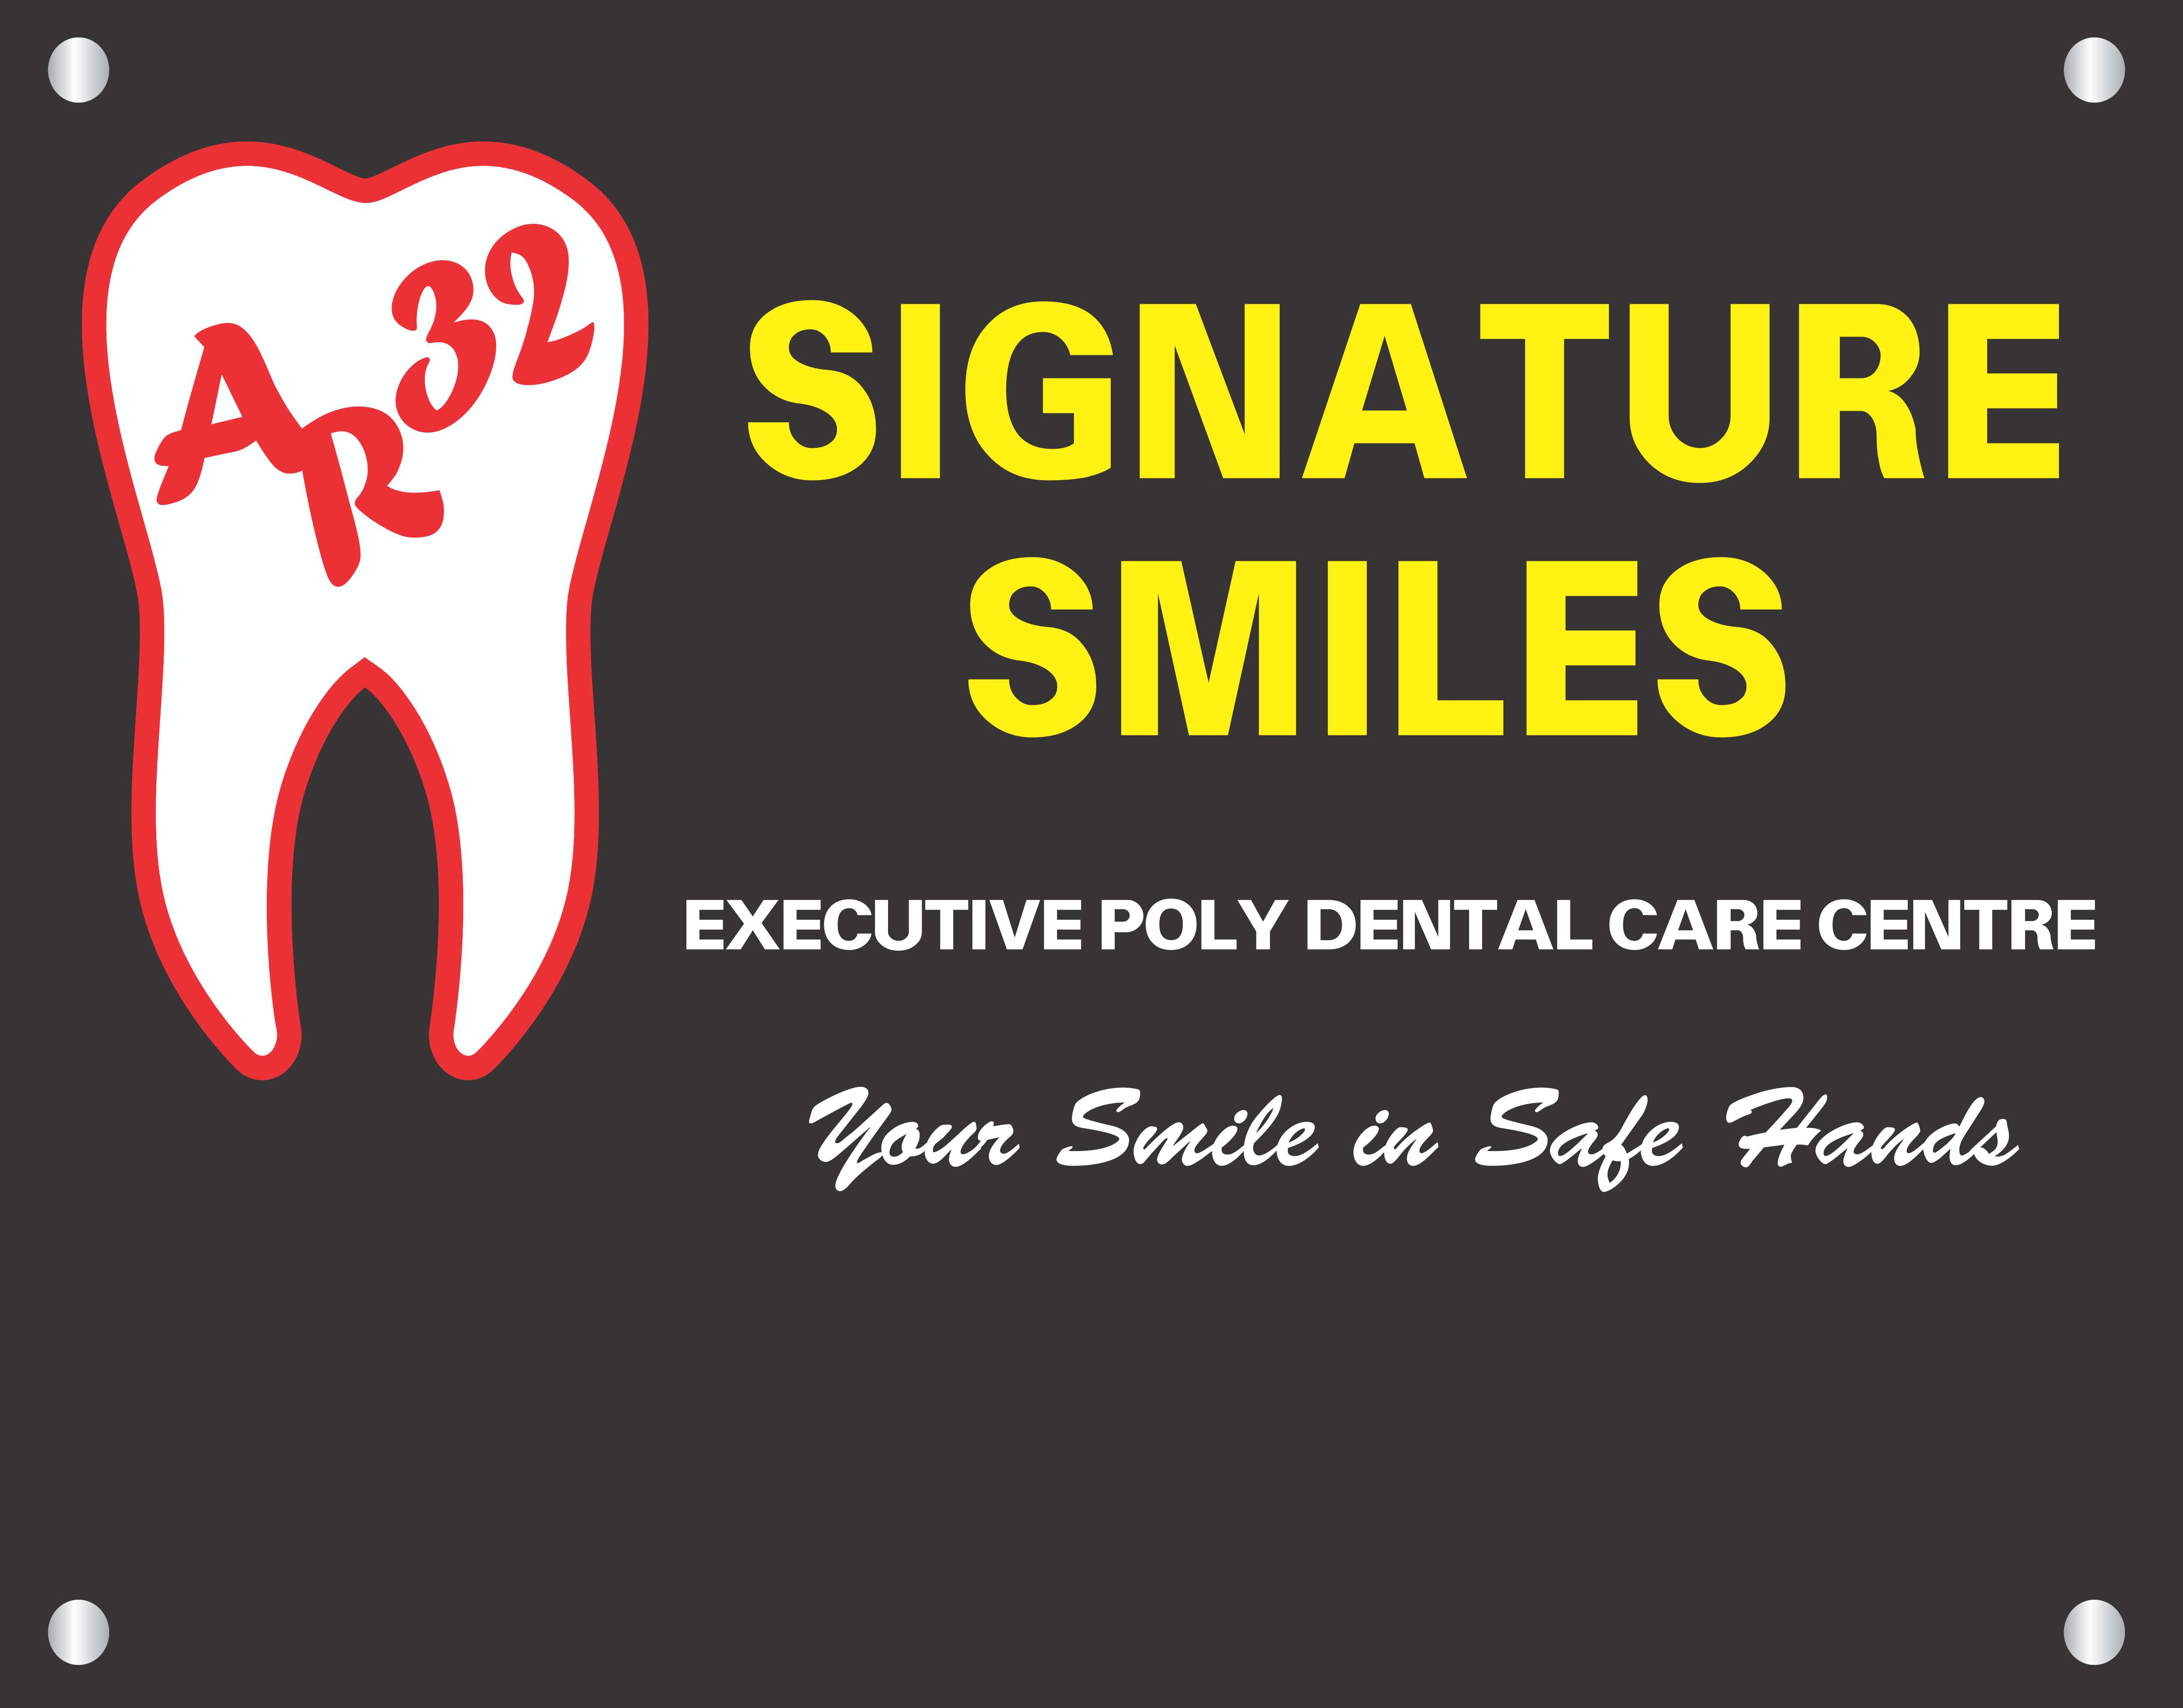 AR 32 Signature Smiles Dental Clinic|Hospitals|Medical Services